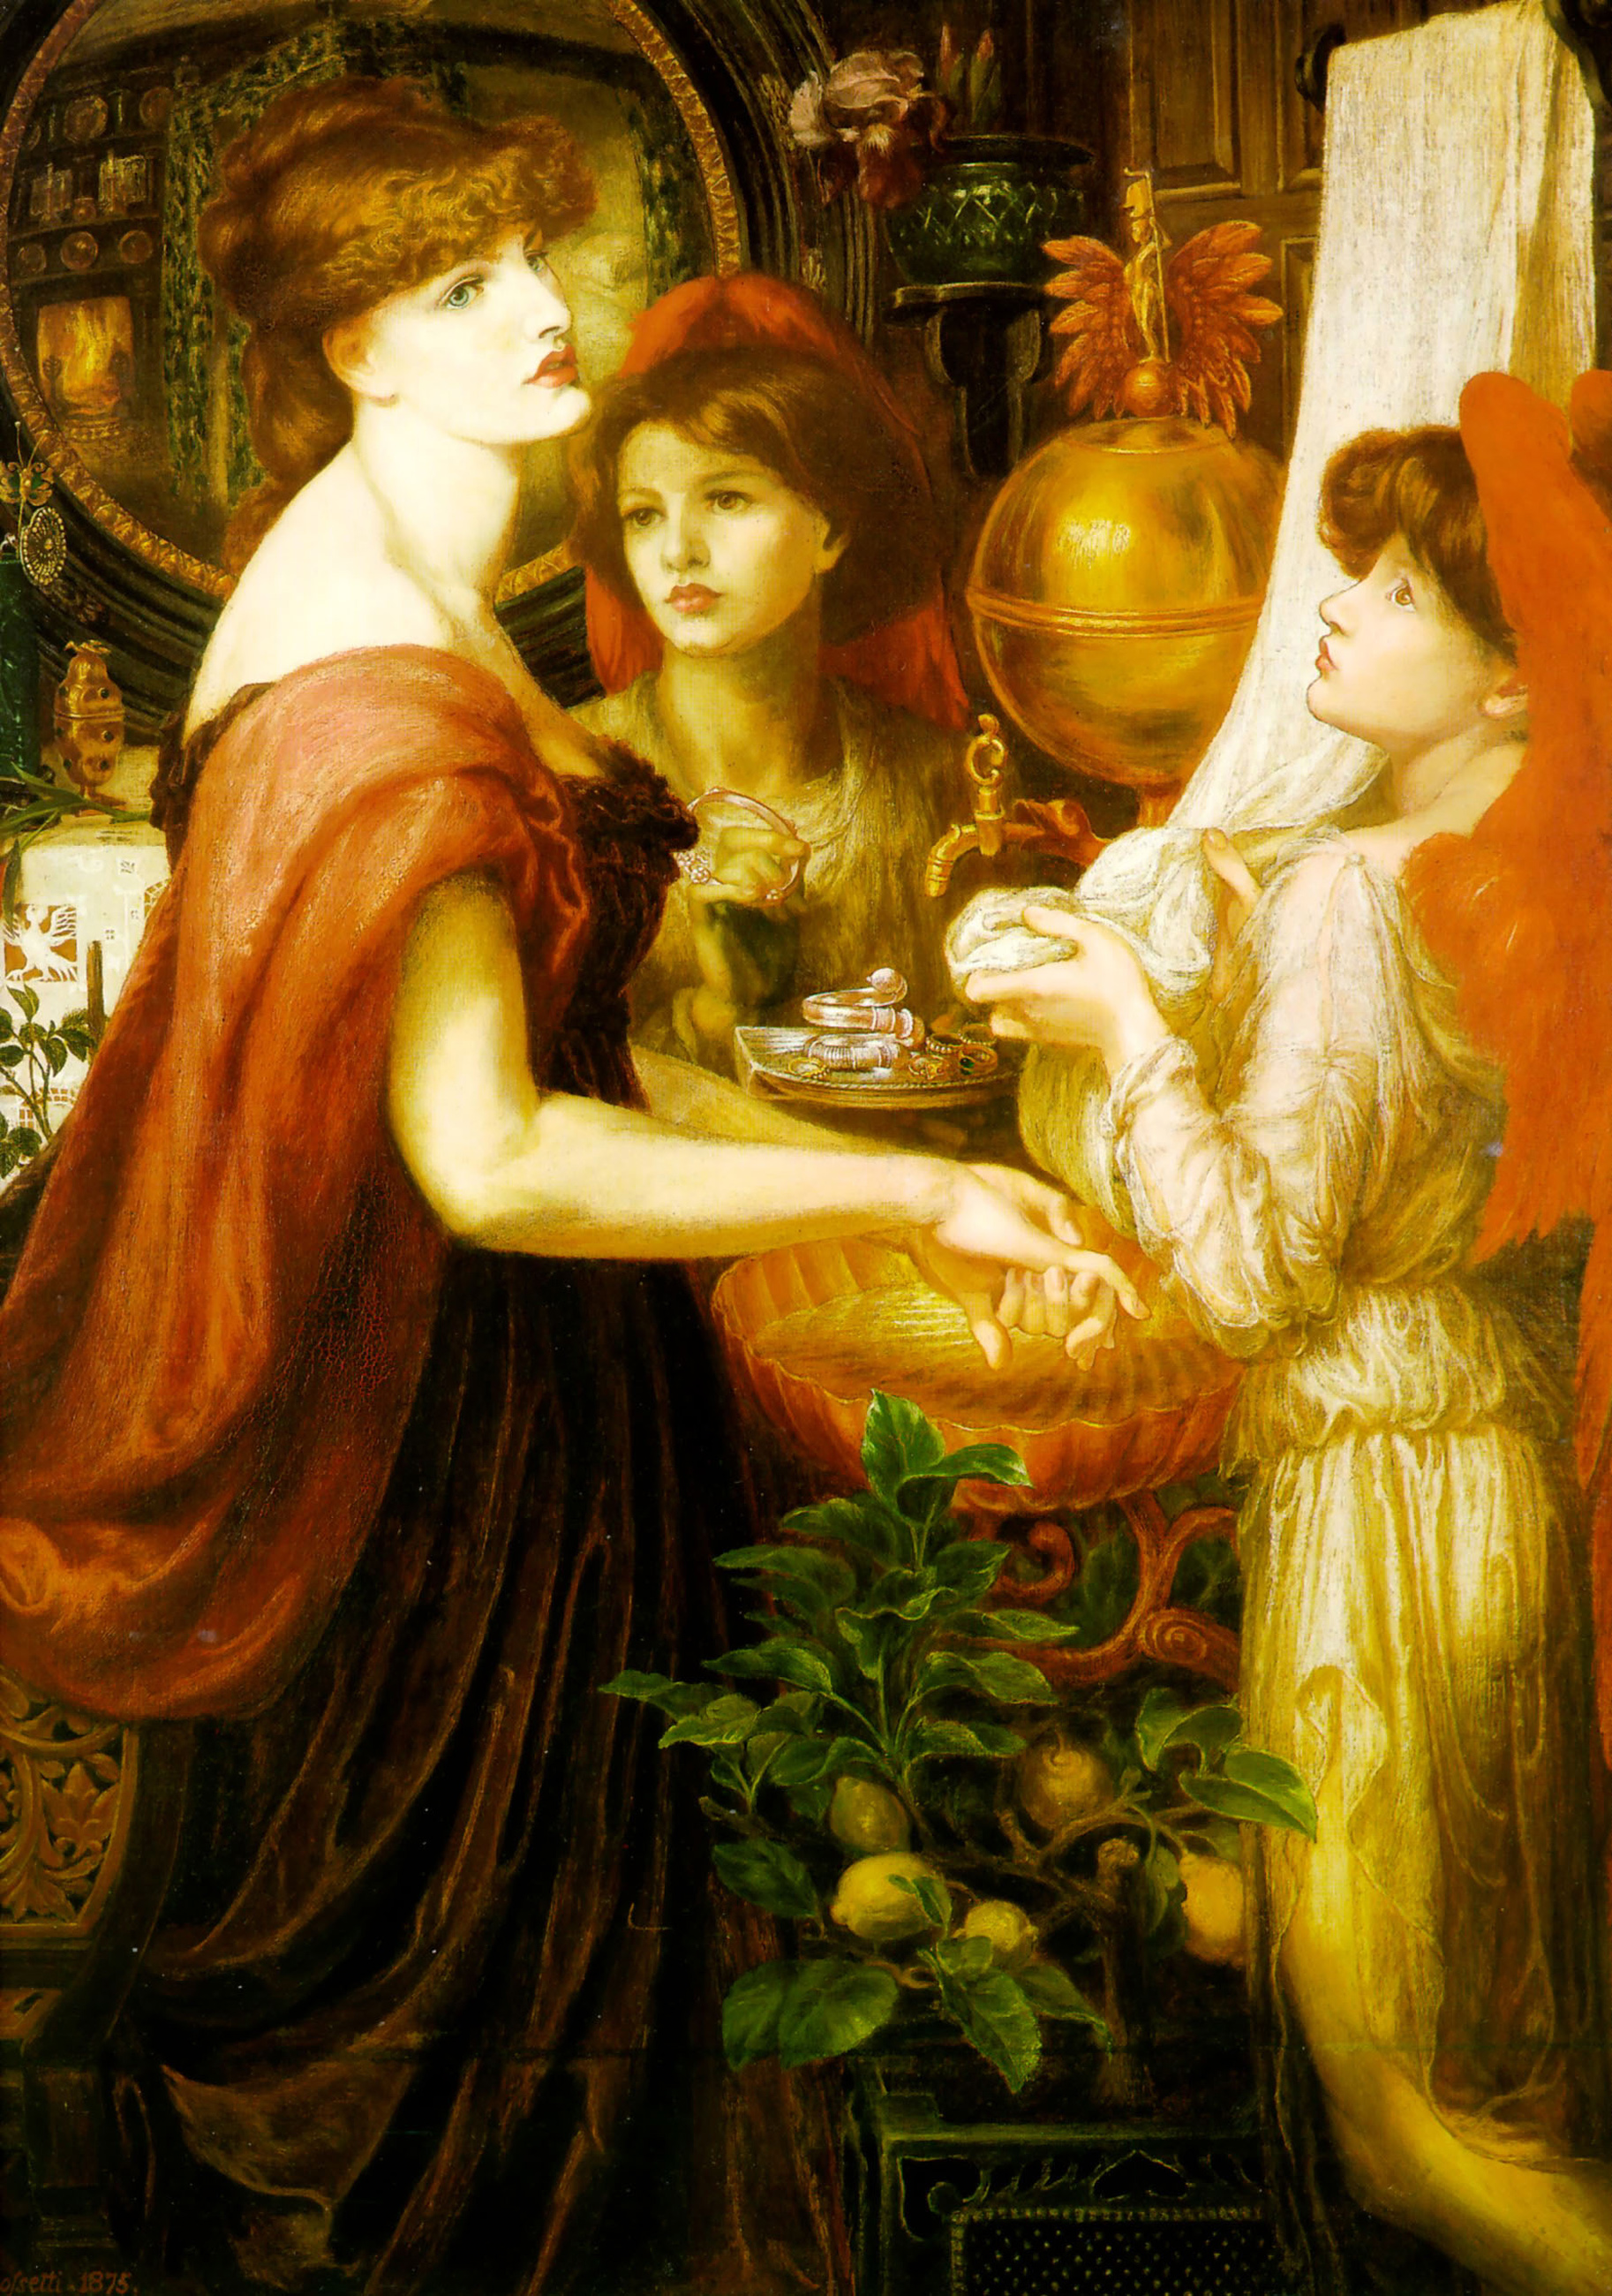 La Bella Mano by Dante Gabriel Rossetti - 1875/1875 Delaware Art Museum